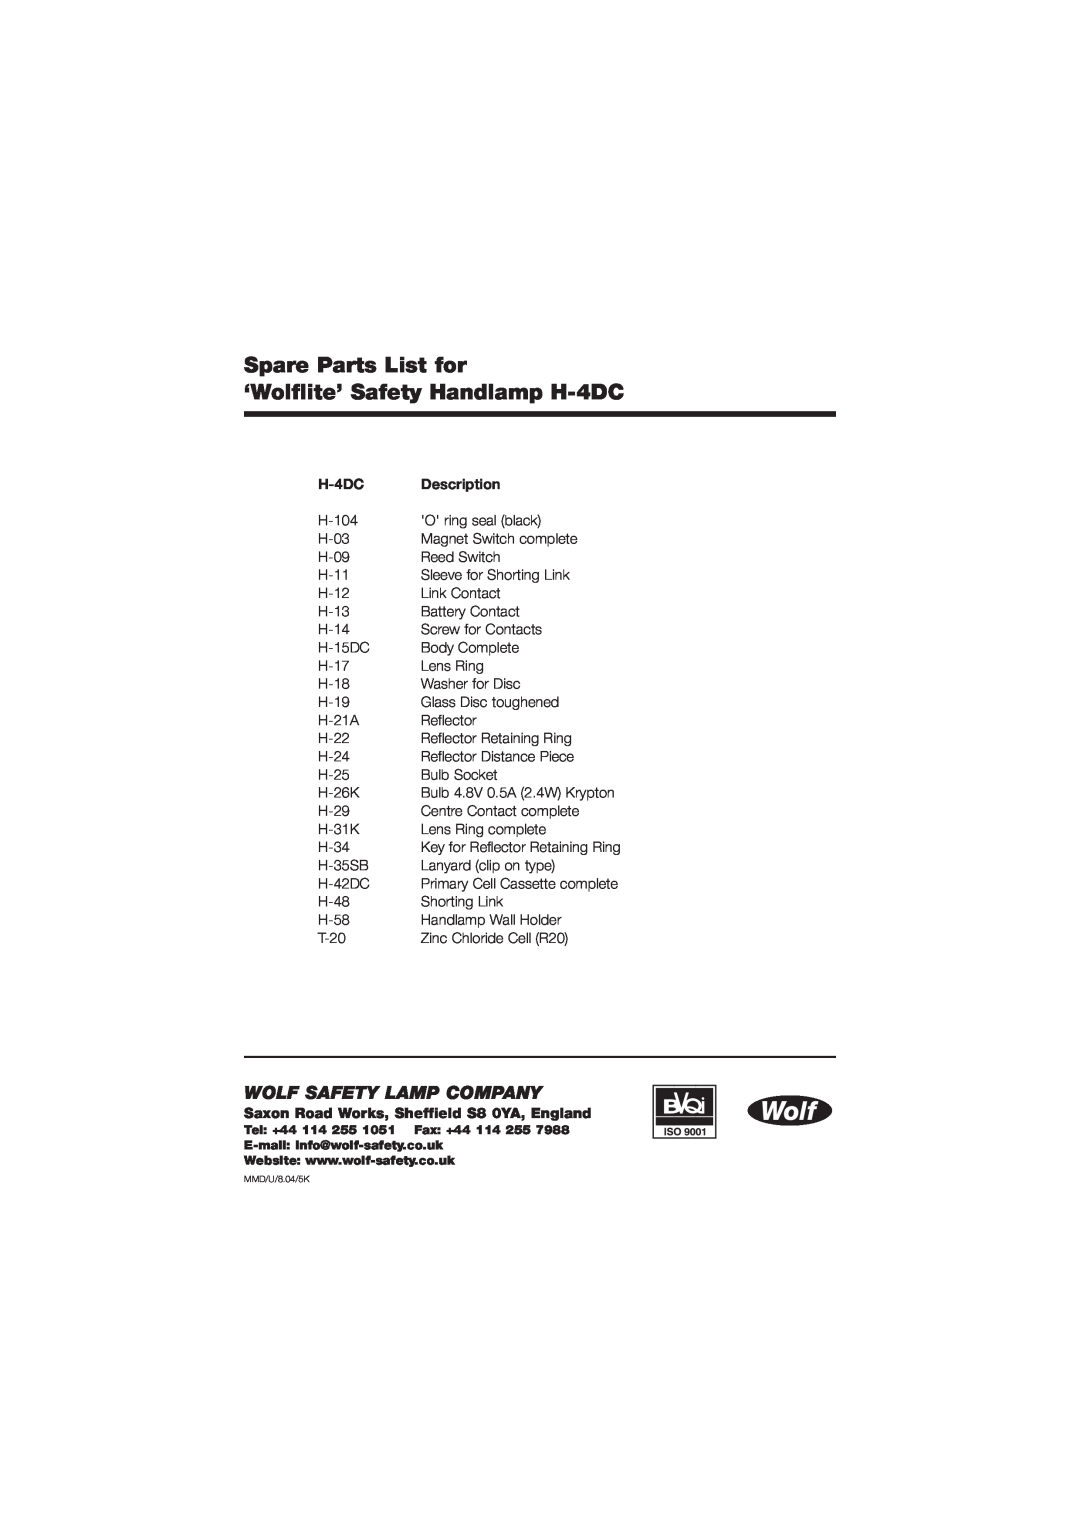 Wolf Spare Parts List for, ‘Wolflite’ Safety Handlamp H-4DC, Description, Saxon Road Works, Sheffield S8 0YA, England 